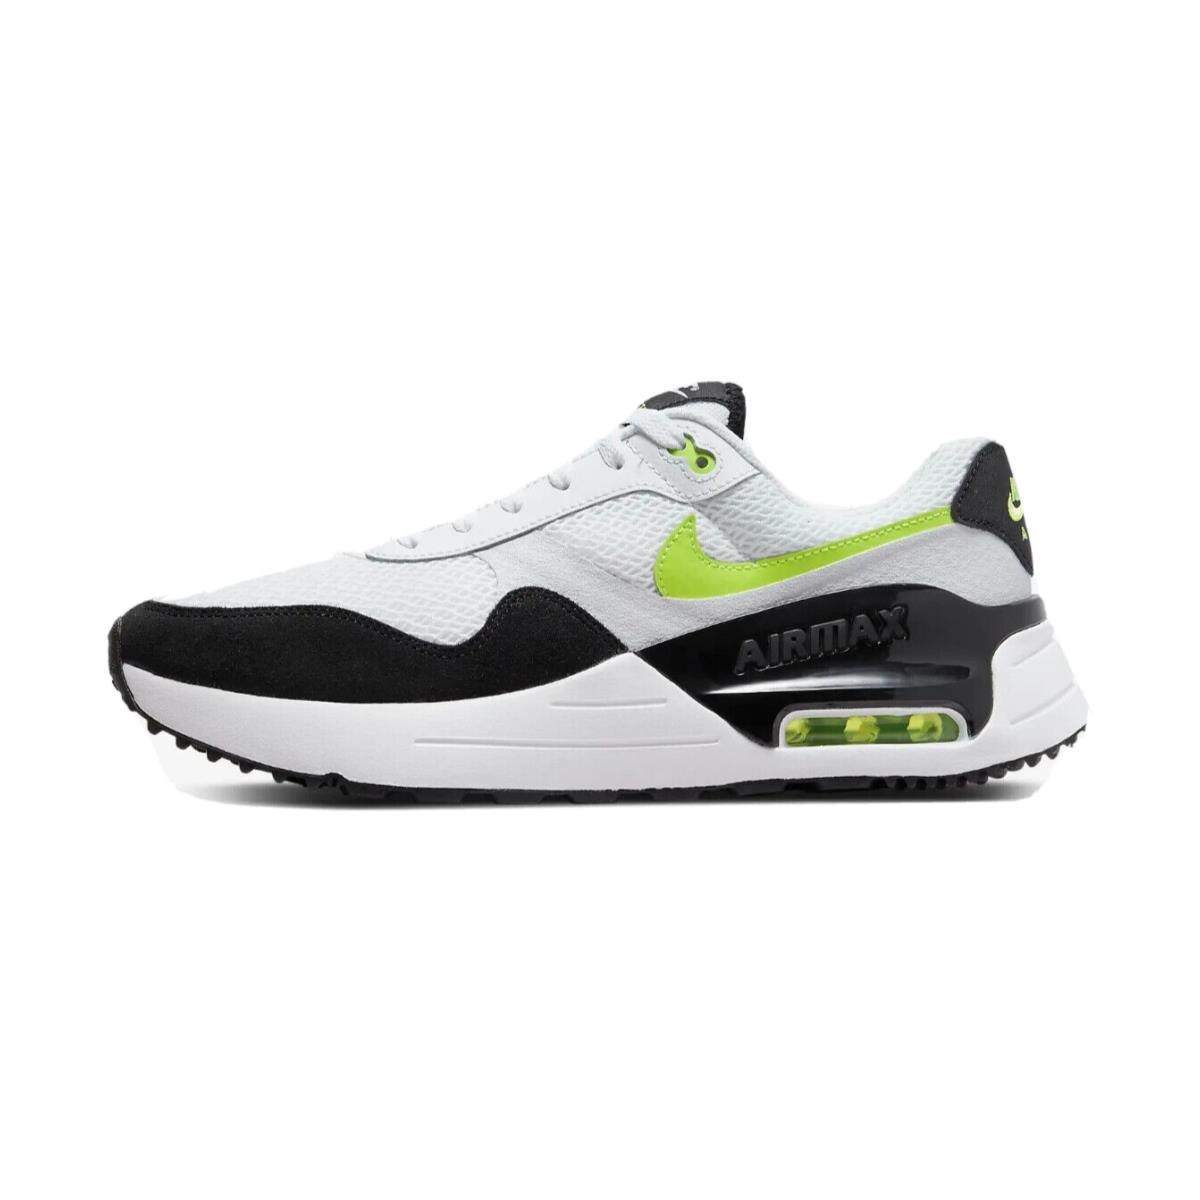 Men Nike Air Max Systm Running Shoes Size 8.5 White Black Volt Grey DM9537 100